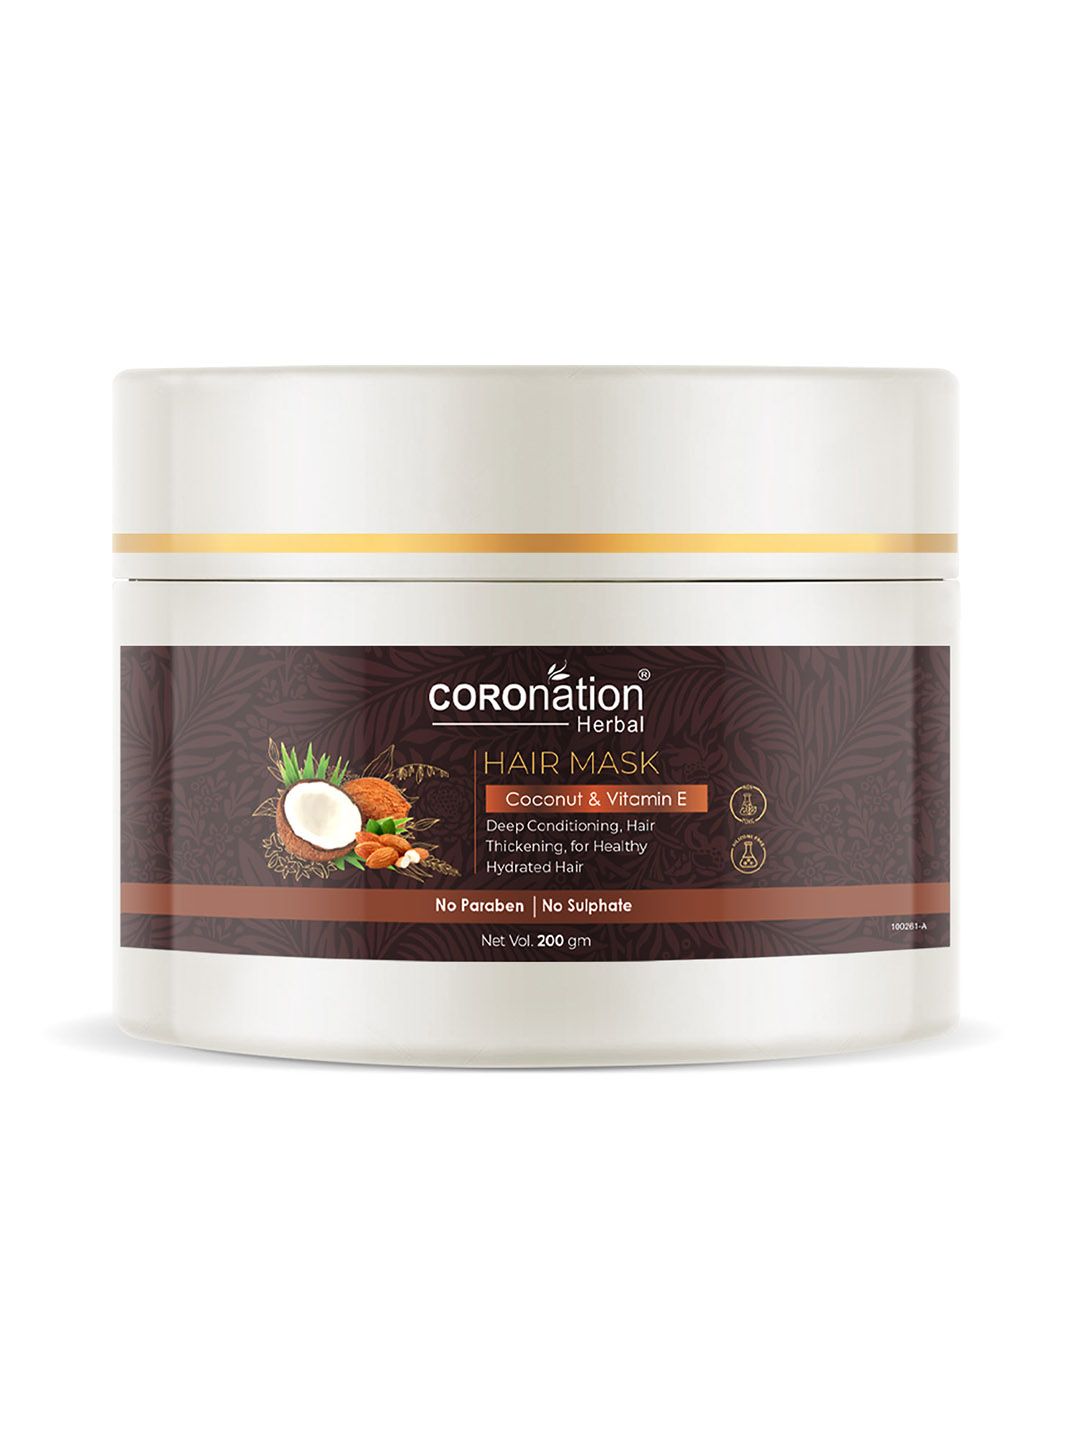 COROnation Herbal Coconut & Vitamin E Hair Mask 200 gm Price in India